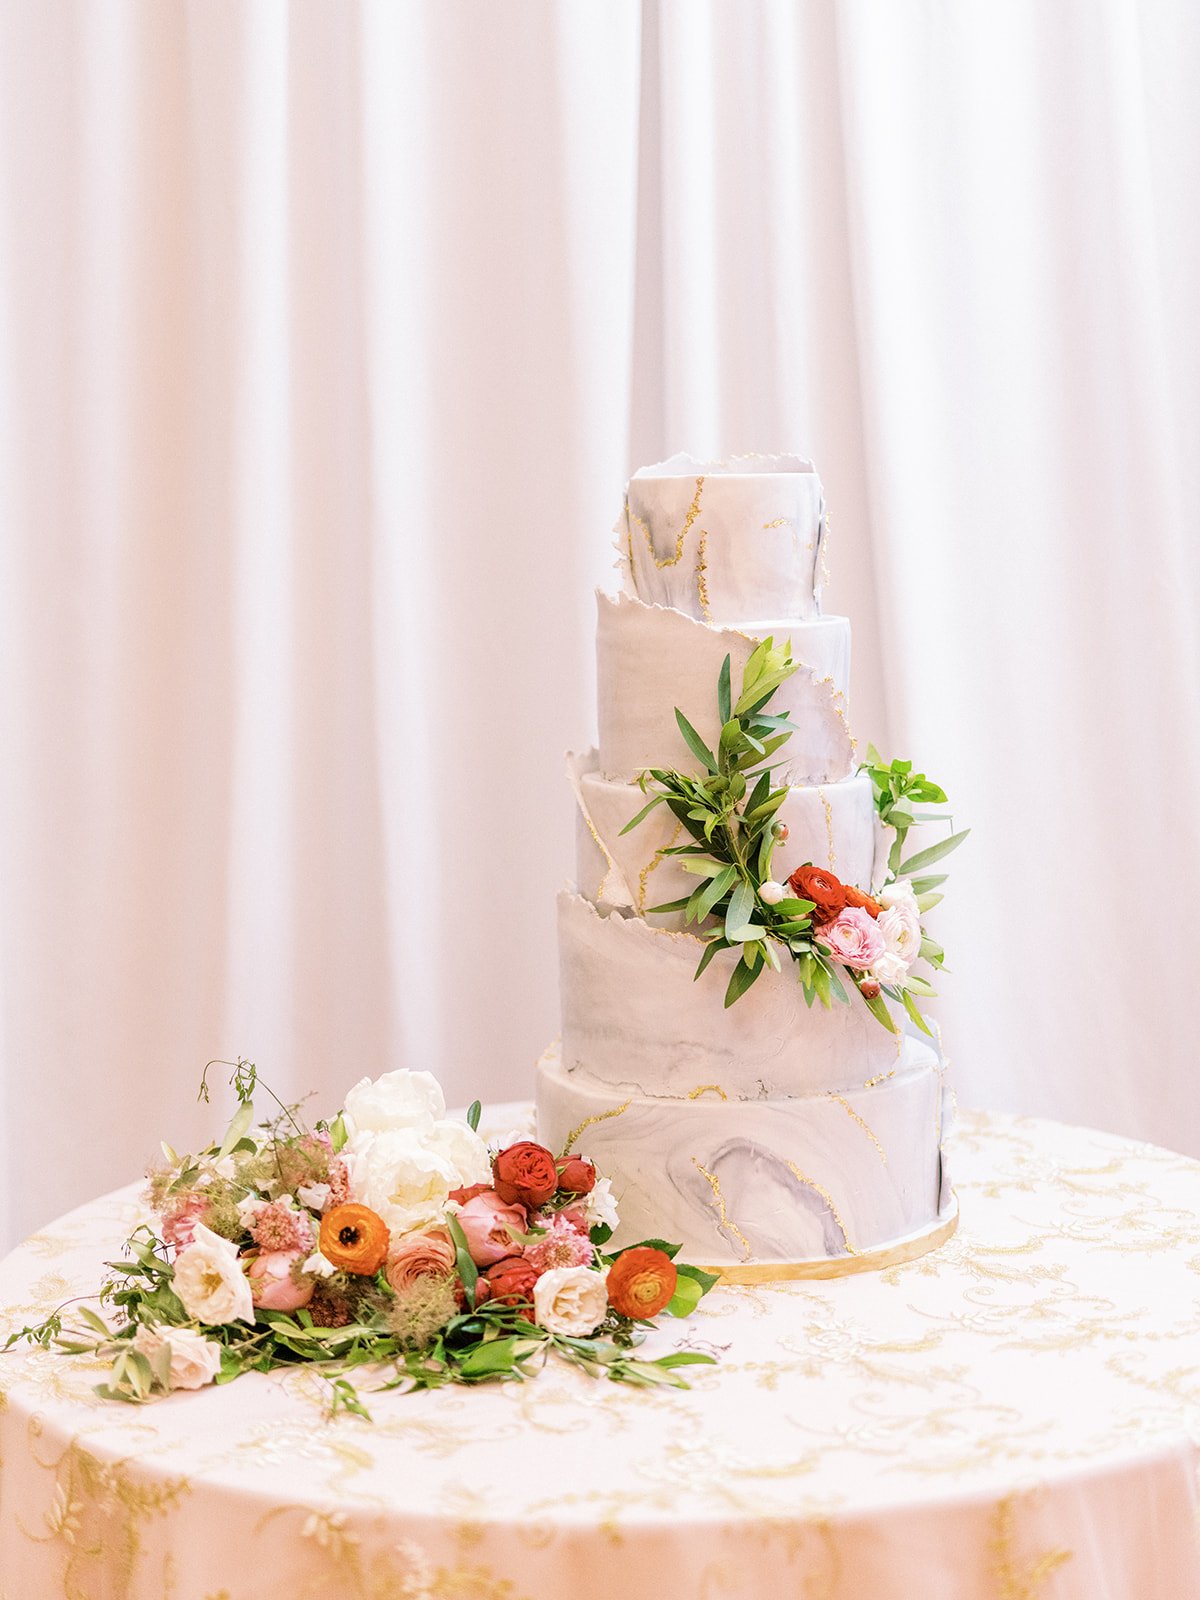 Gorgeous cake florals designed with ranunculus and greenery. Nashville wedding florist at War Memorial.